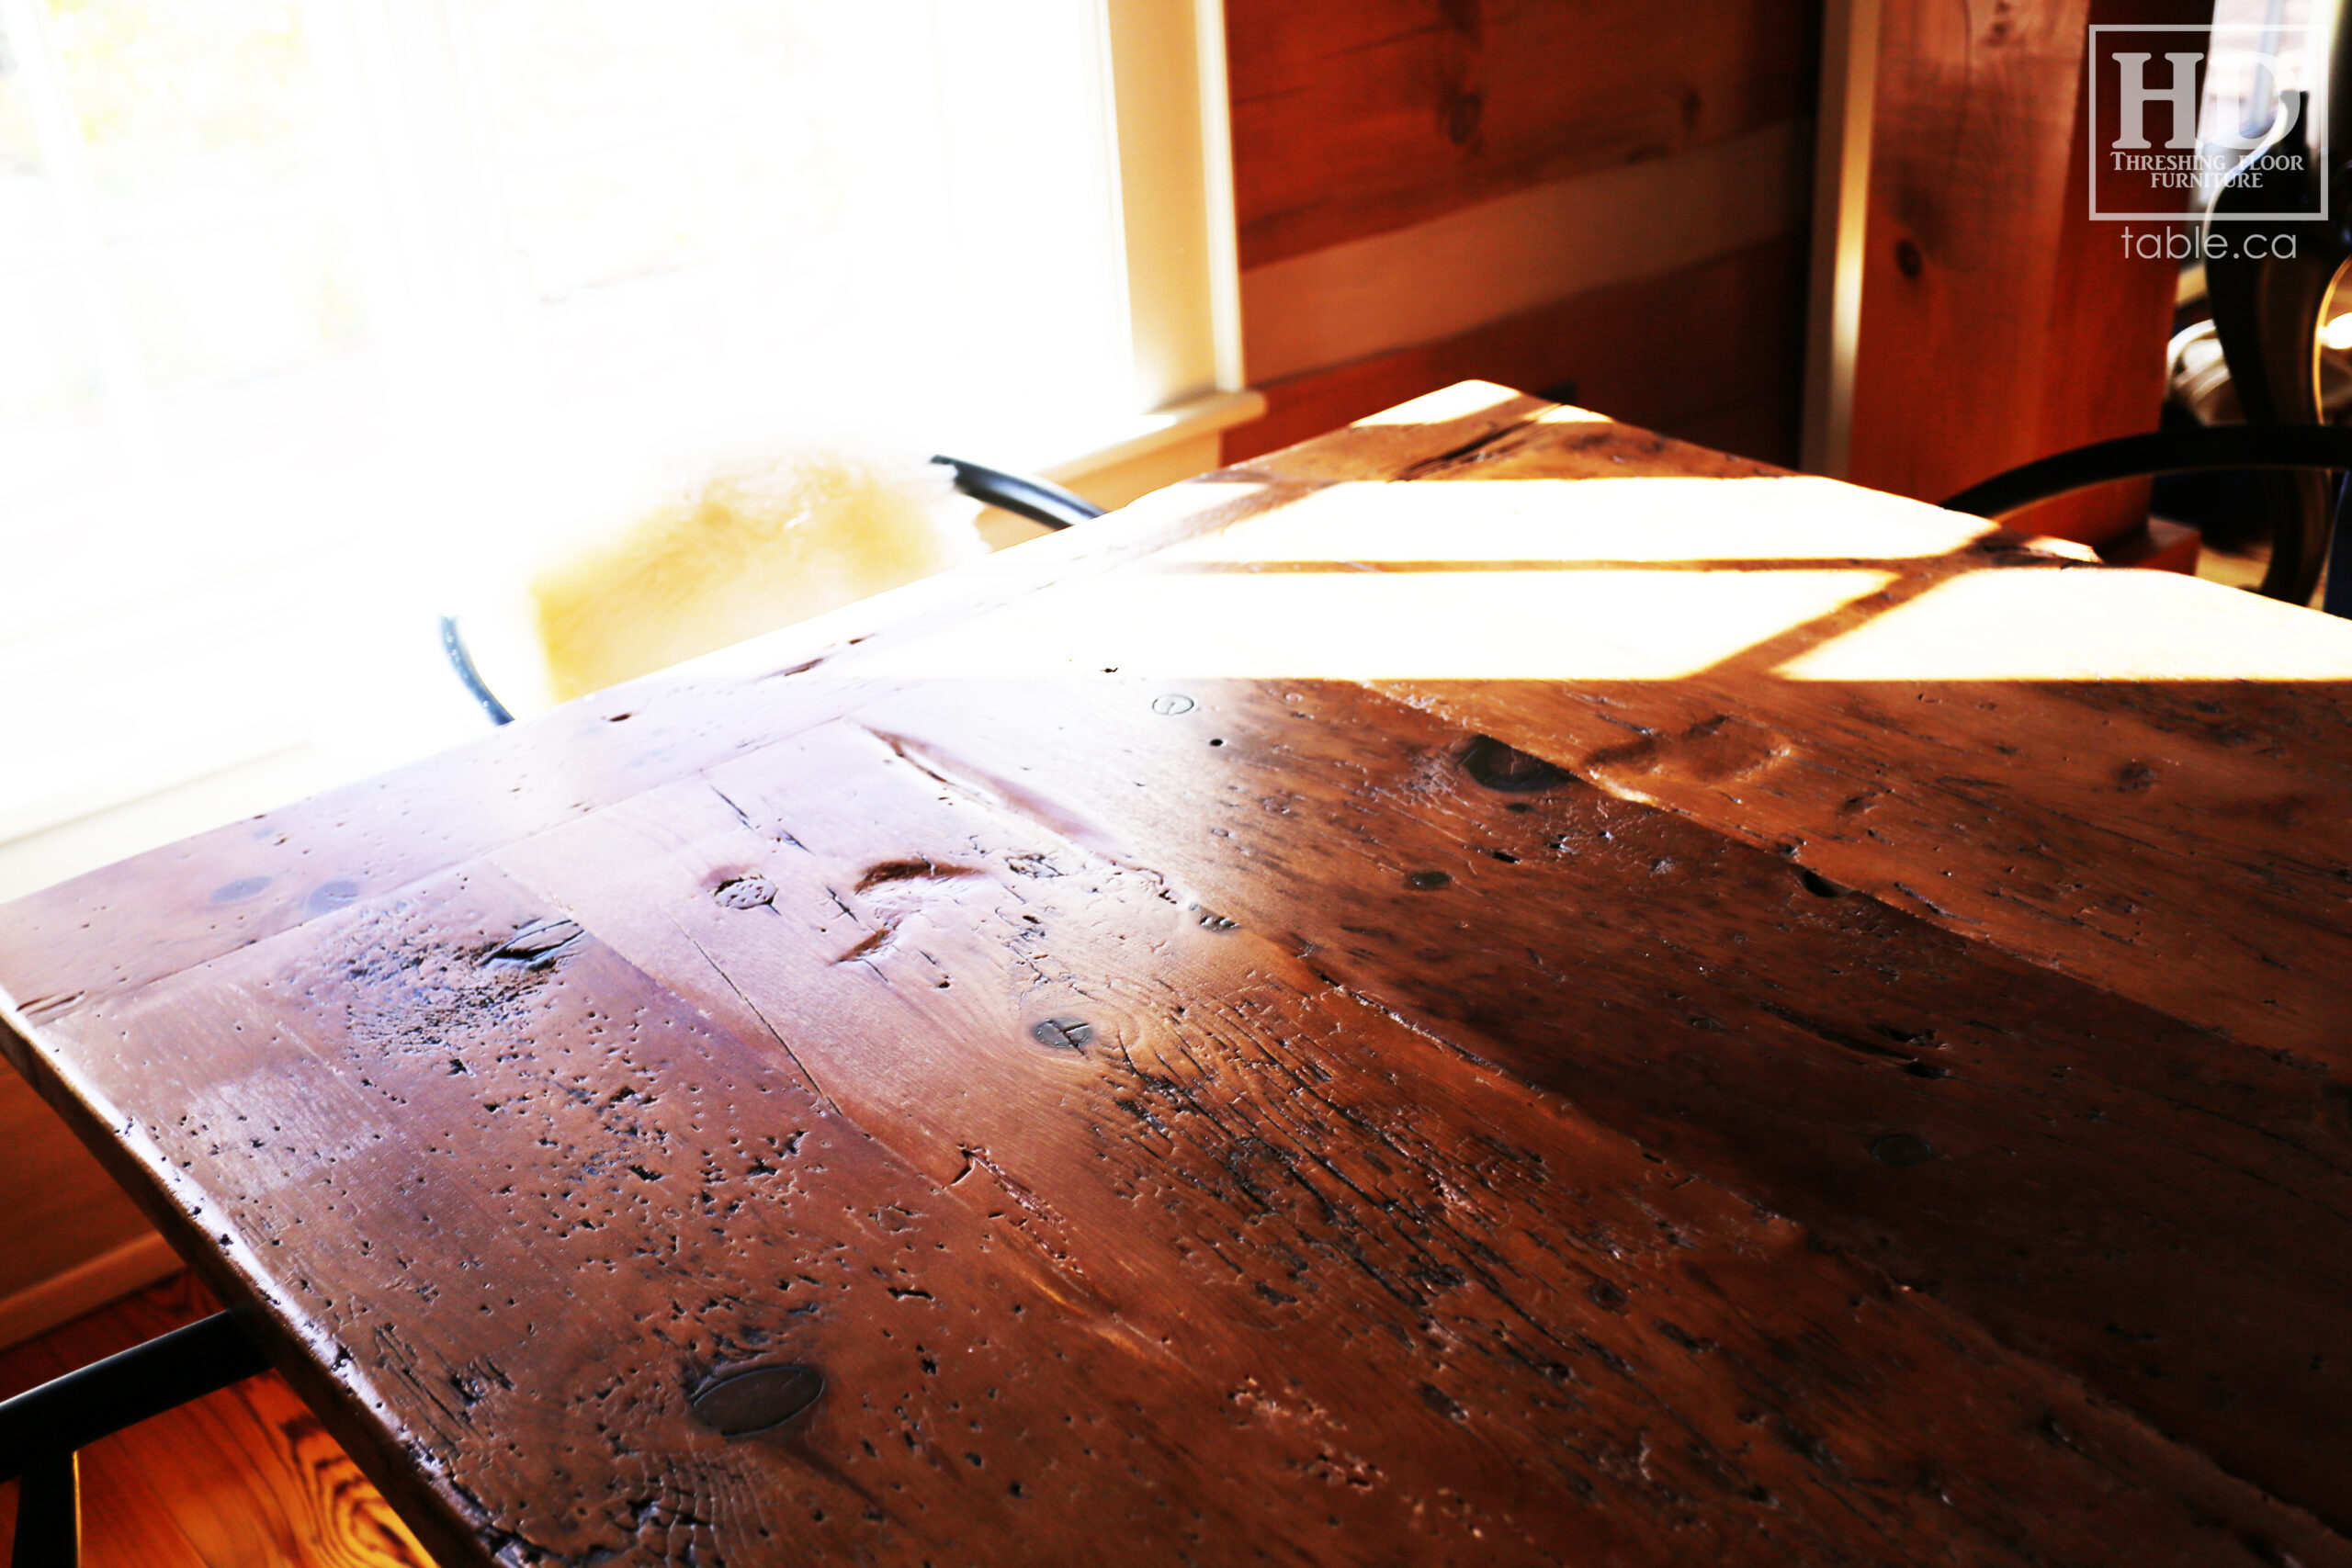 Distressed Reclaimed Wood Table by HD Threshing Floor Furniture / www.table.ca